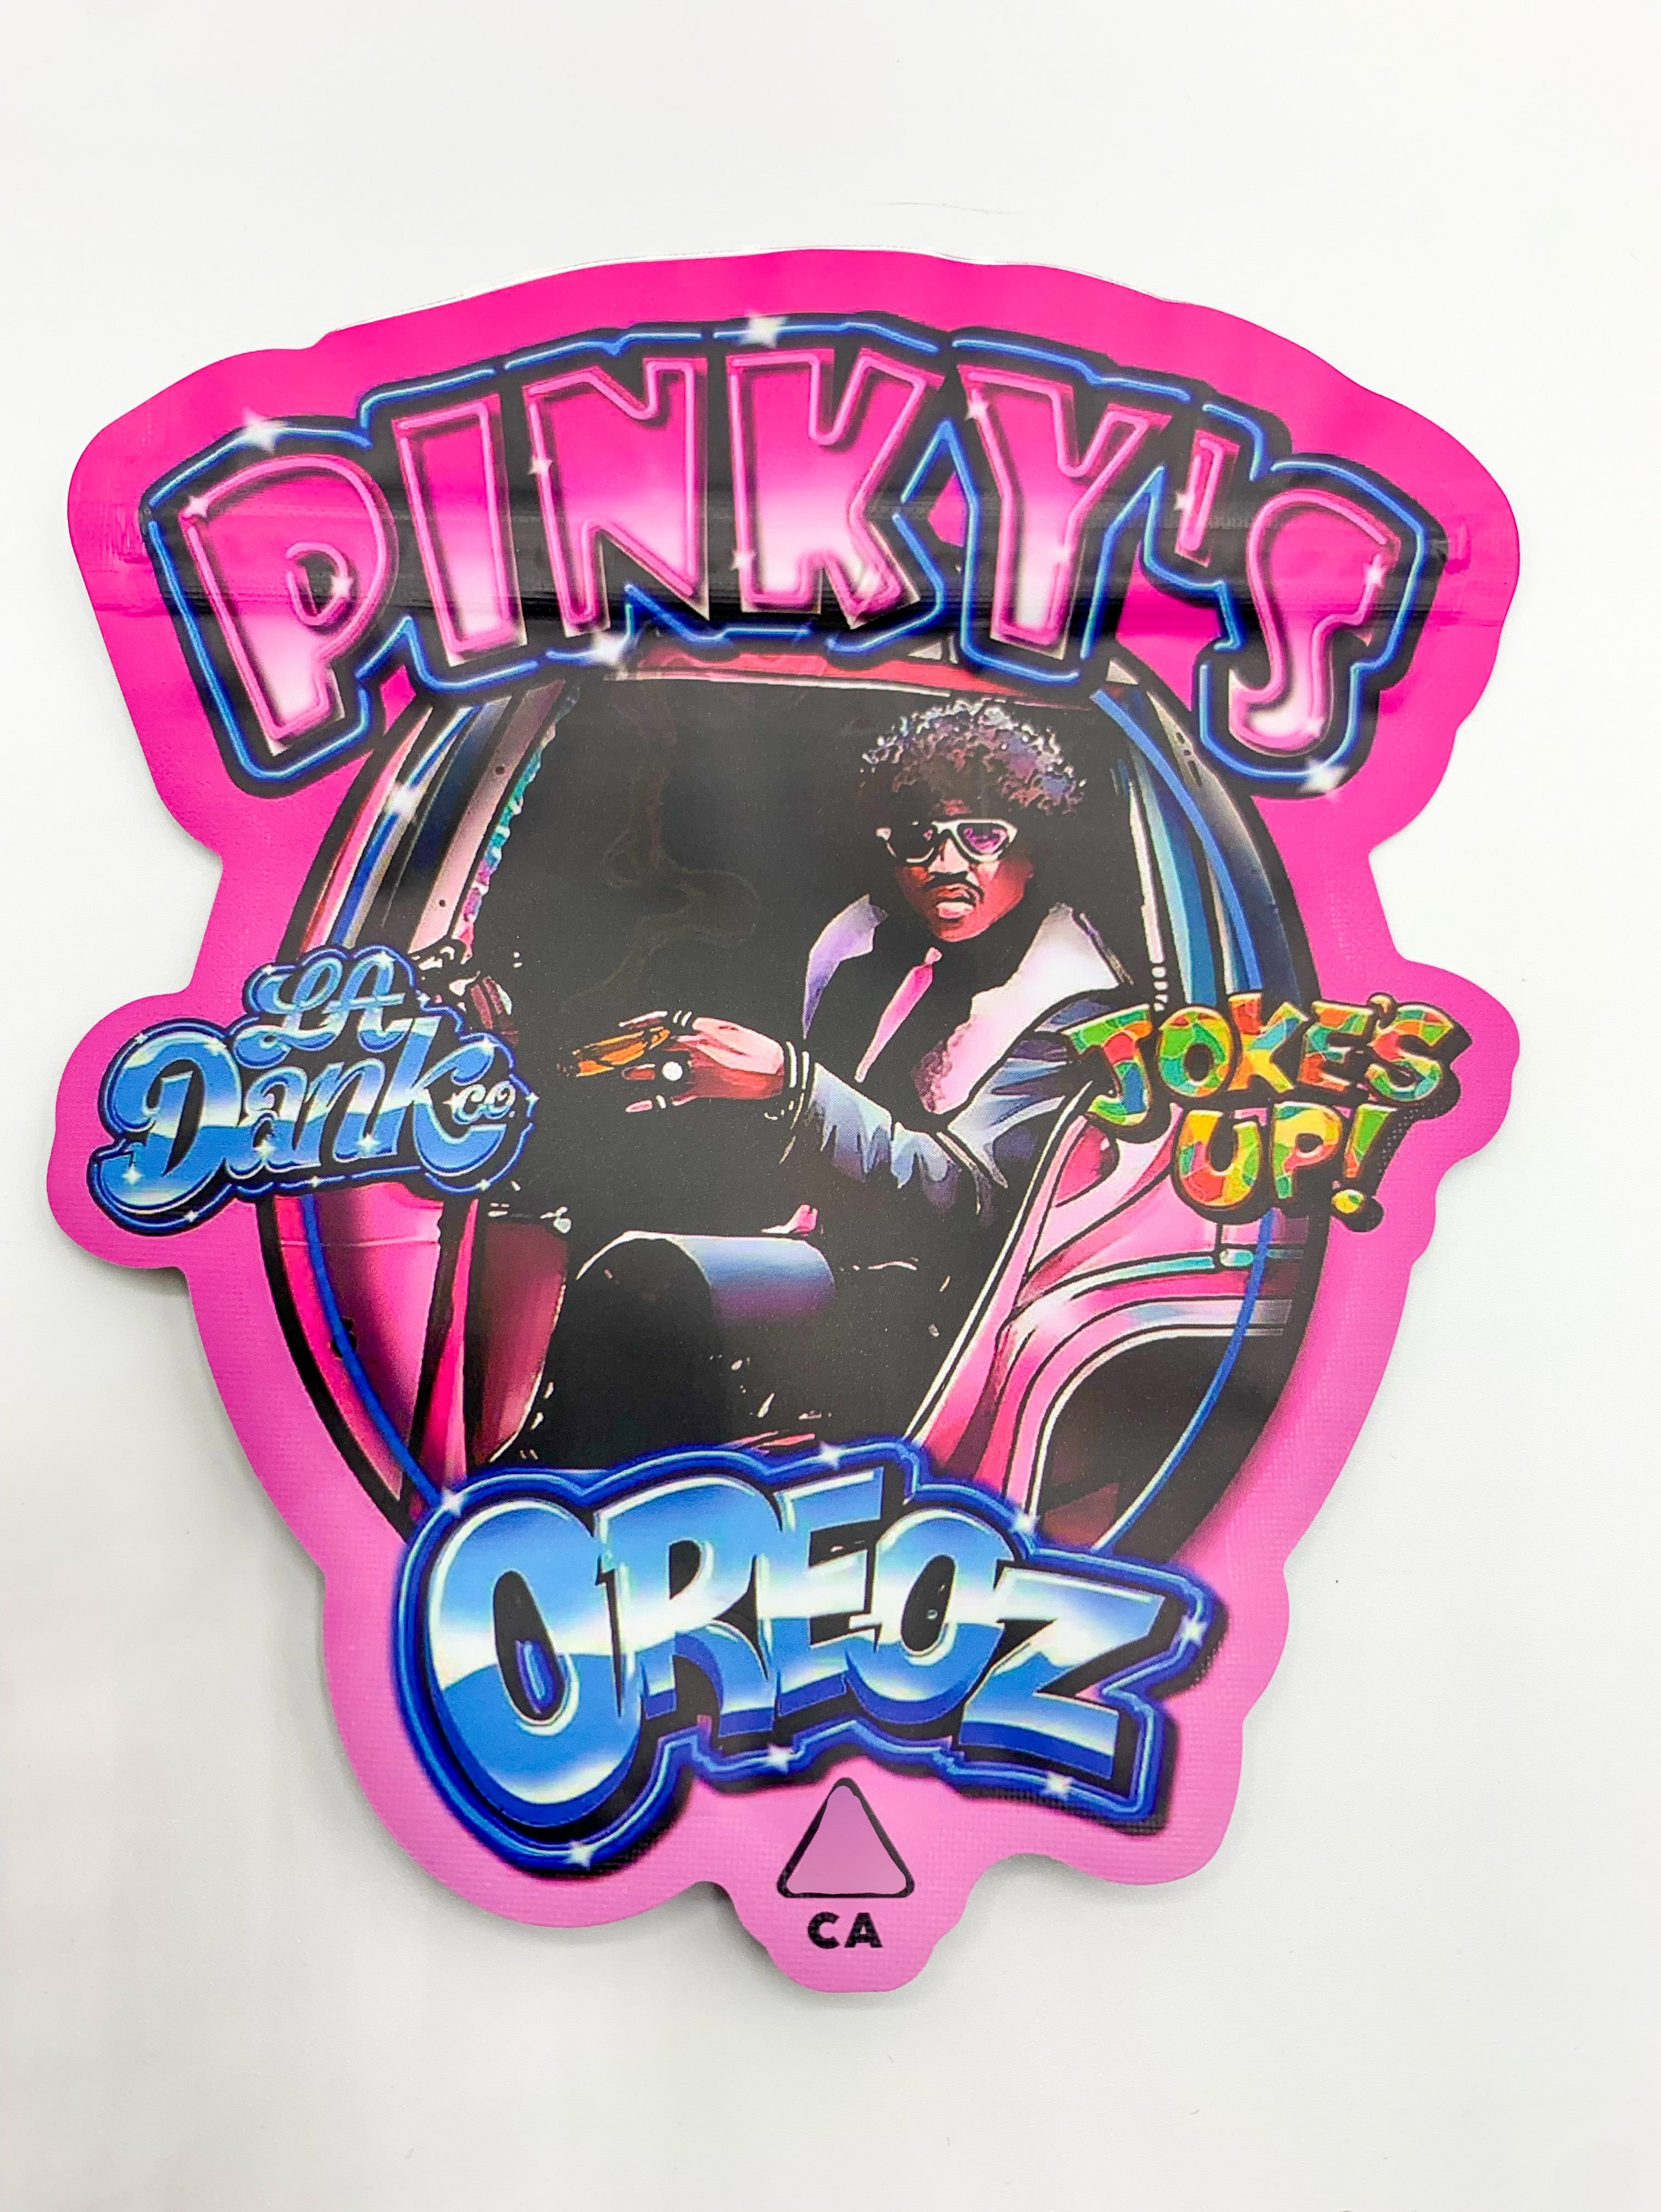 3D Jokes up Pinky’s Oreoz  3.5-7g Mylar bags